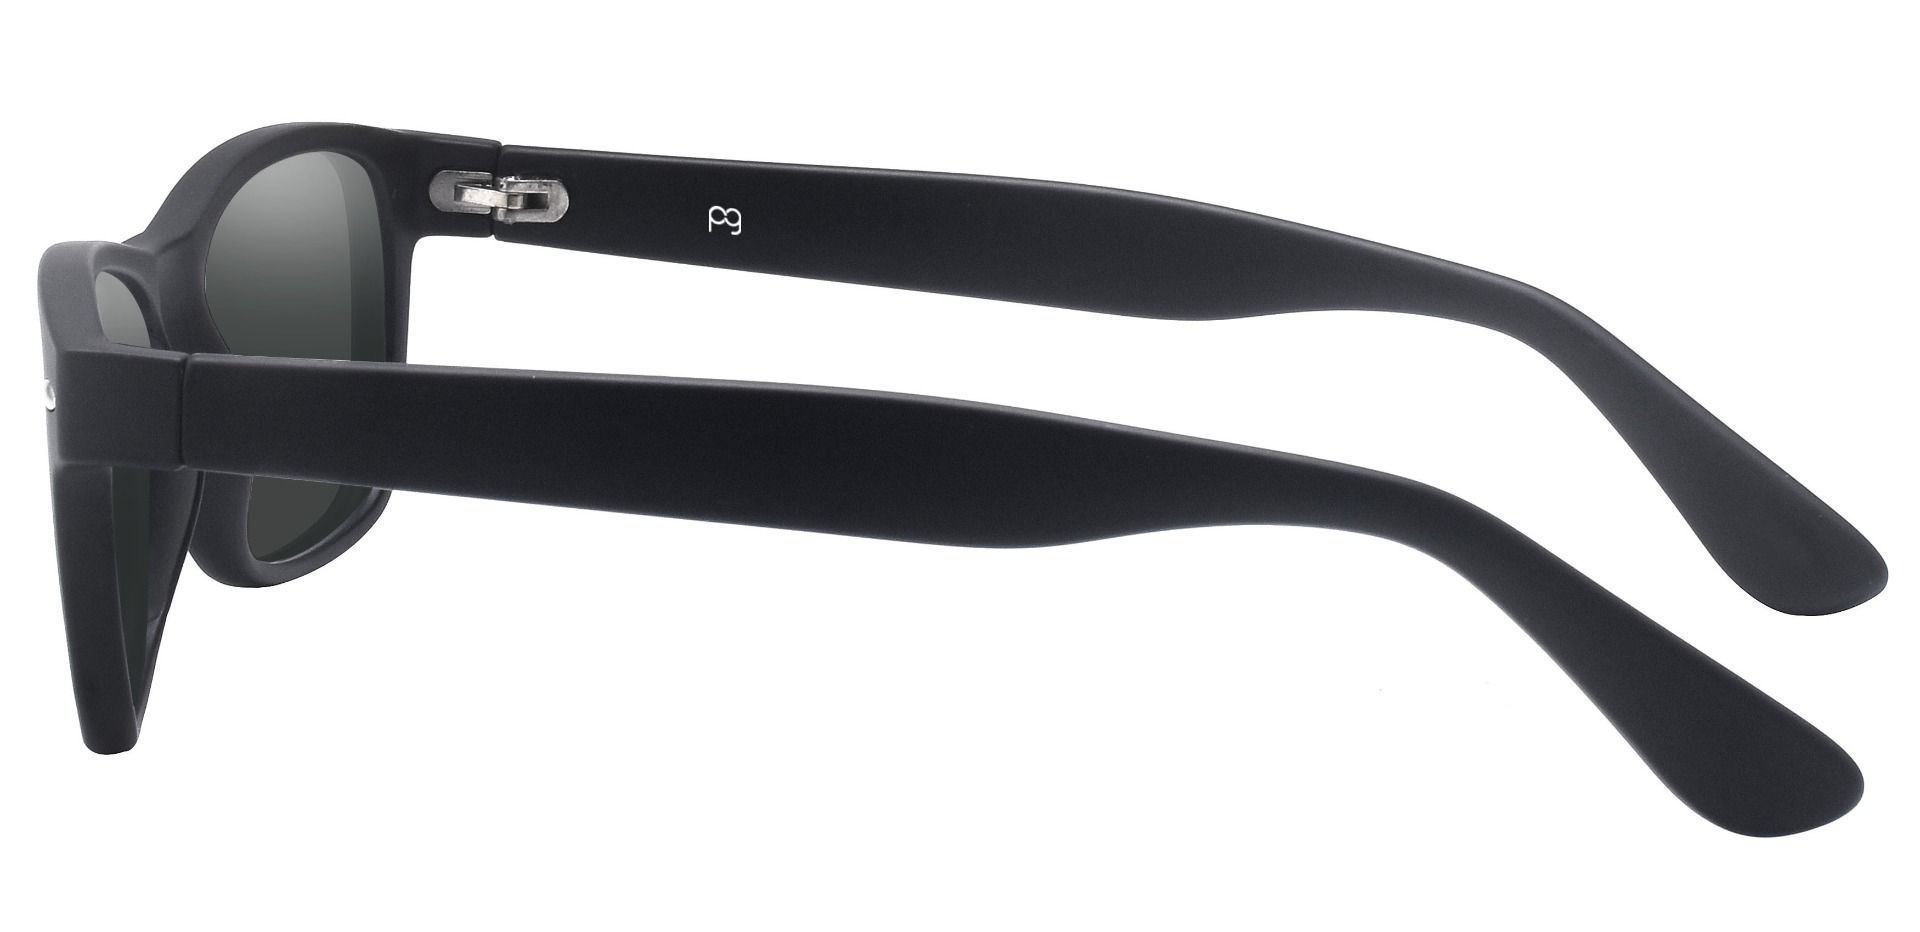 Kent Rectangle Prescription Sunglasses - Black Frame With Gray Lenses